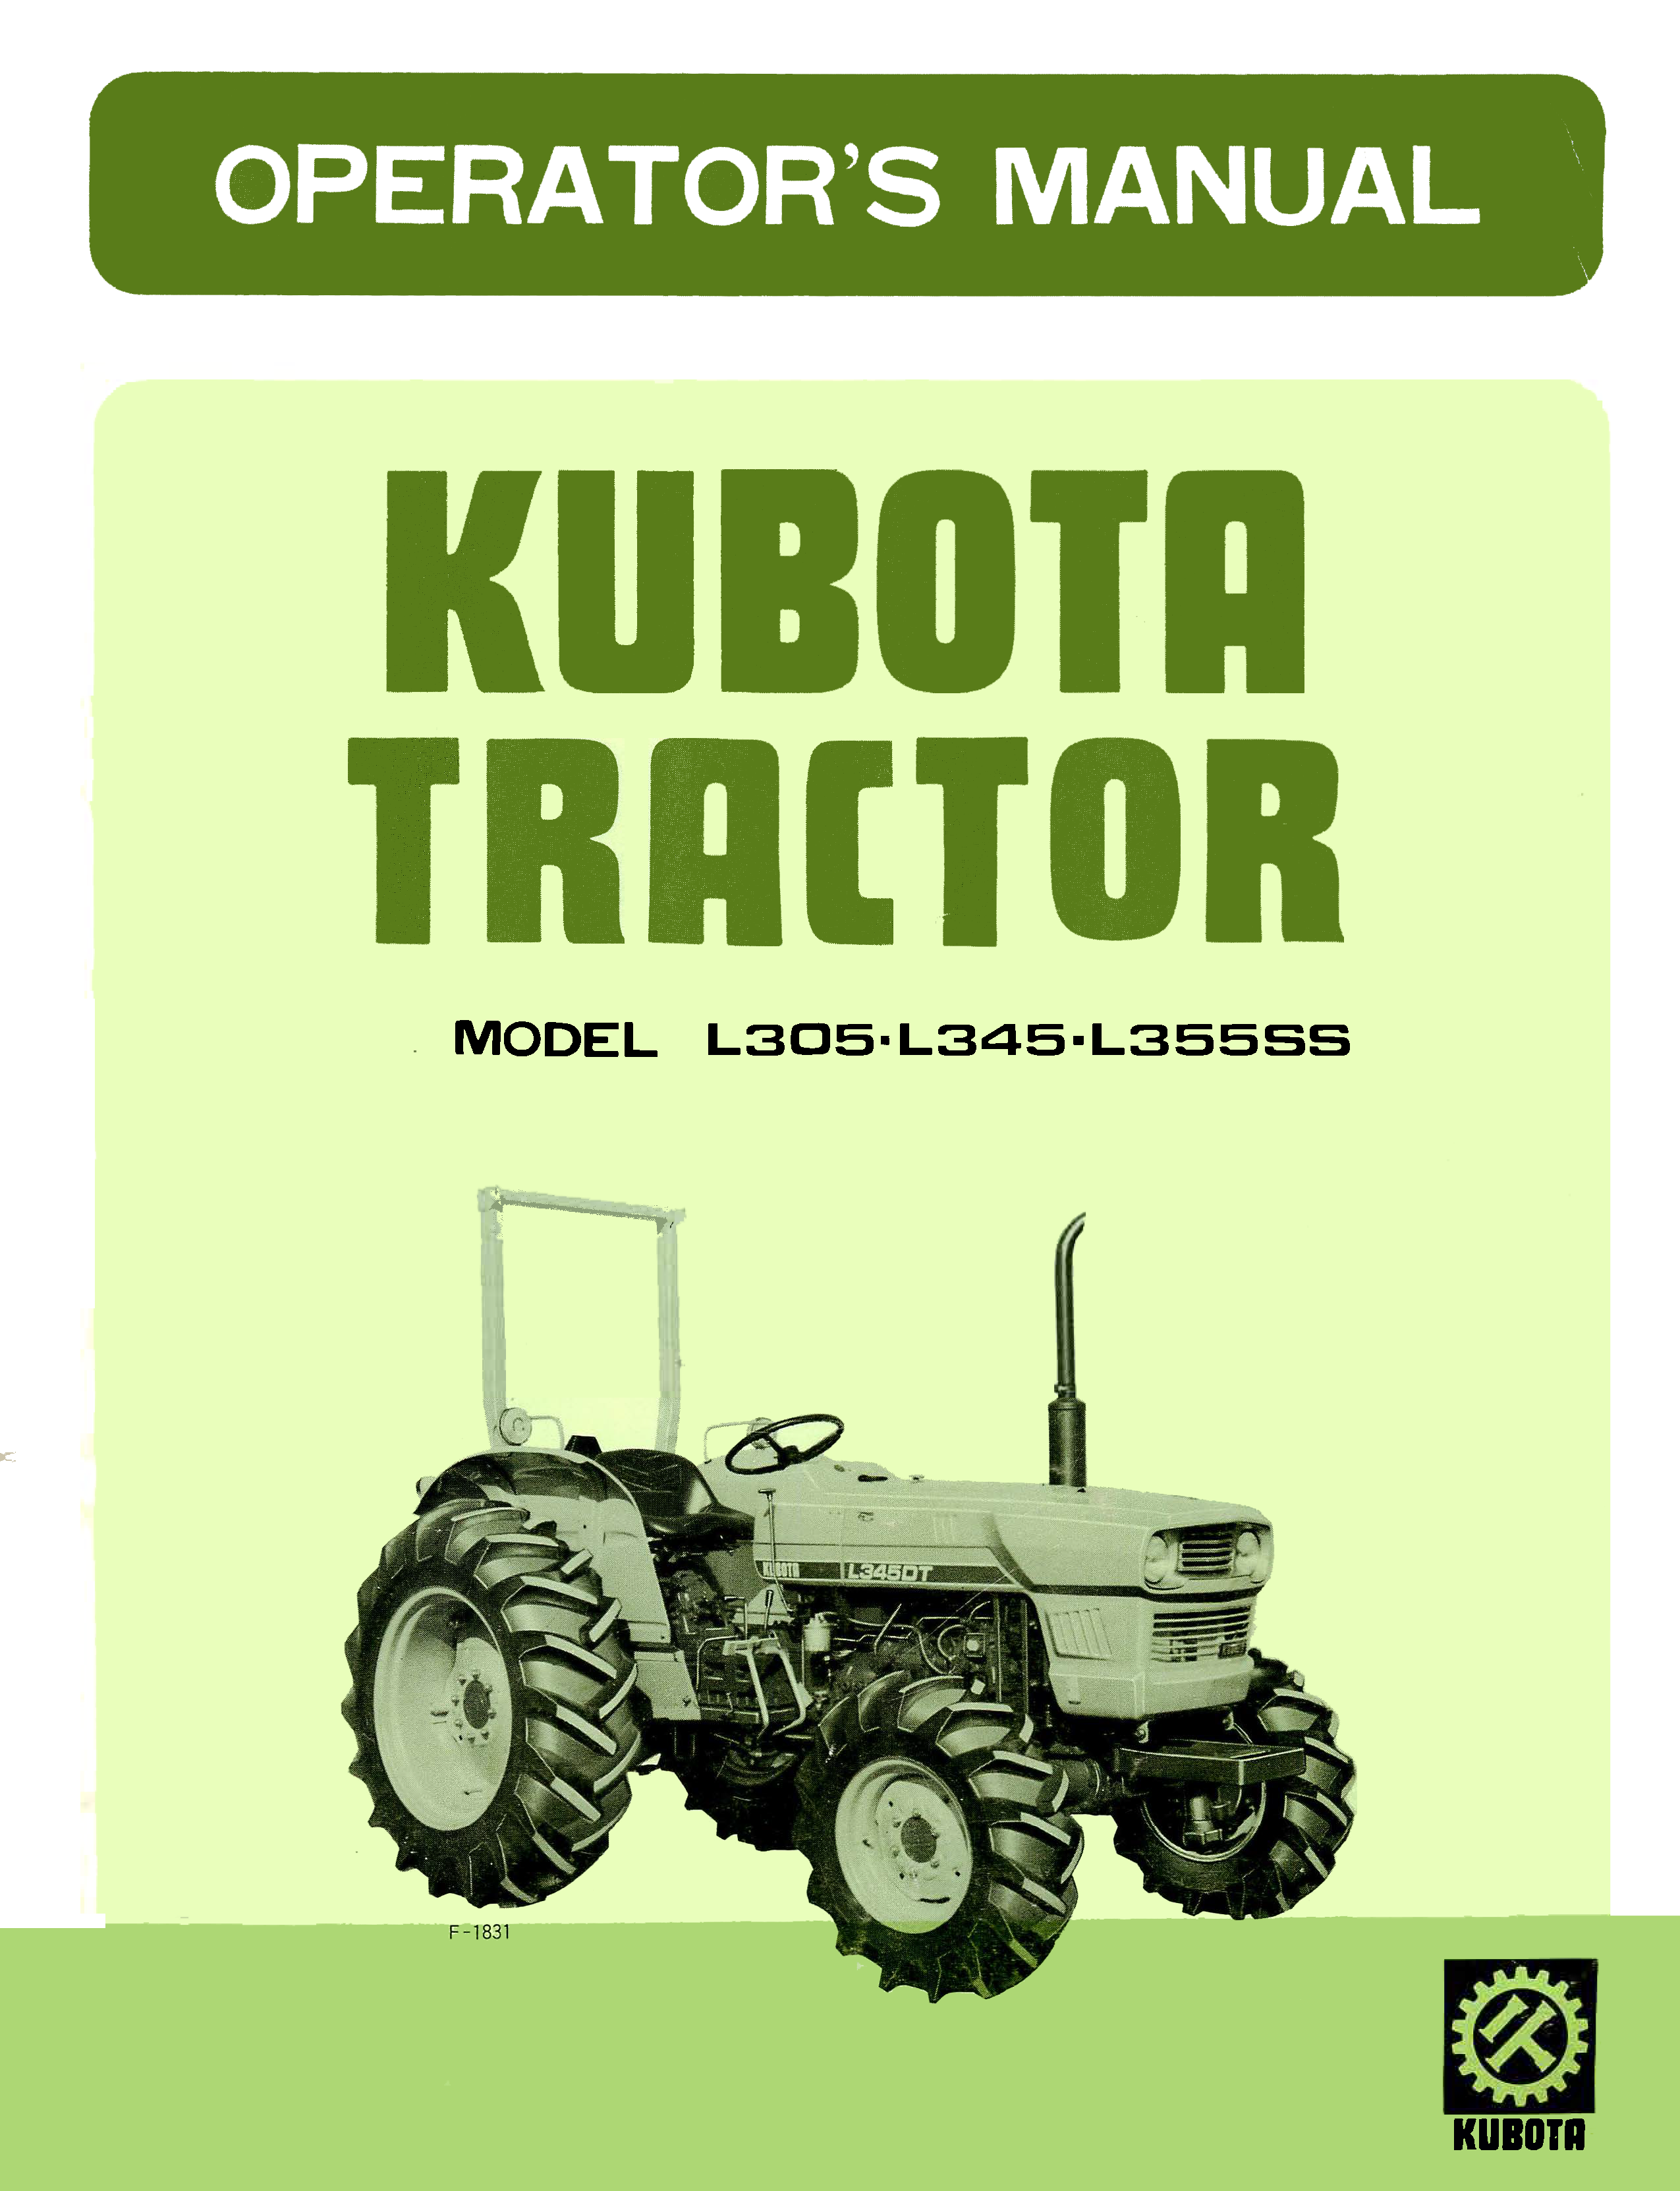 Kubota Tractor Model L305, L345, L355SS Operator's Manual